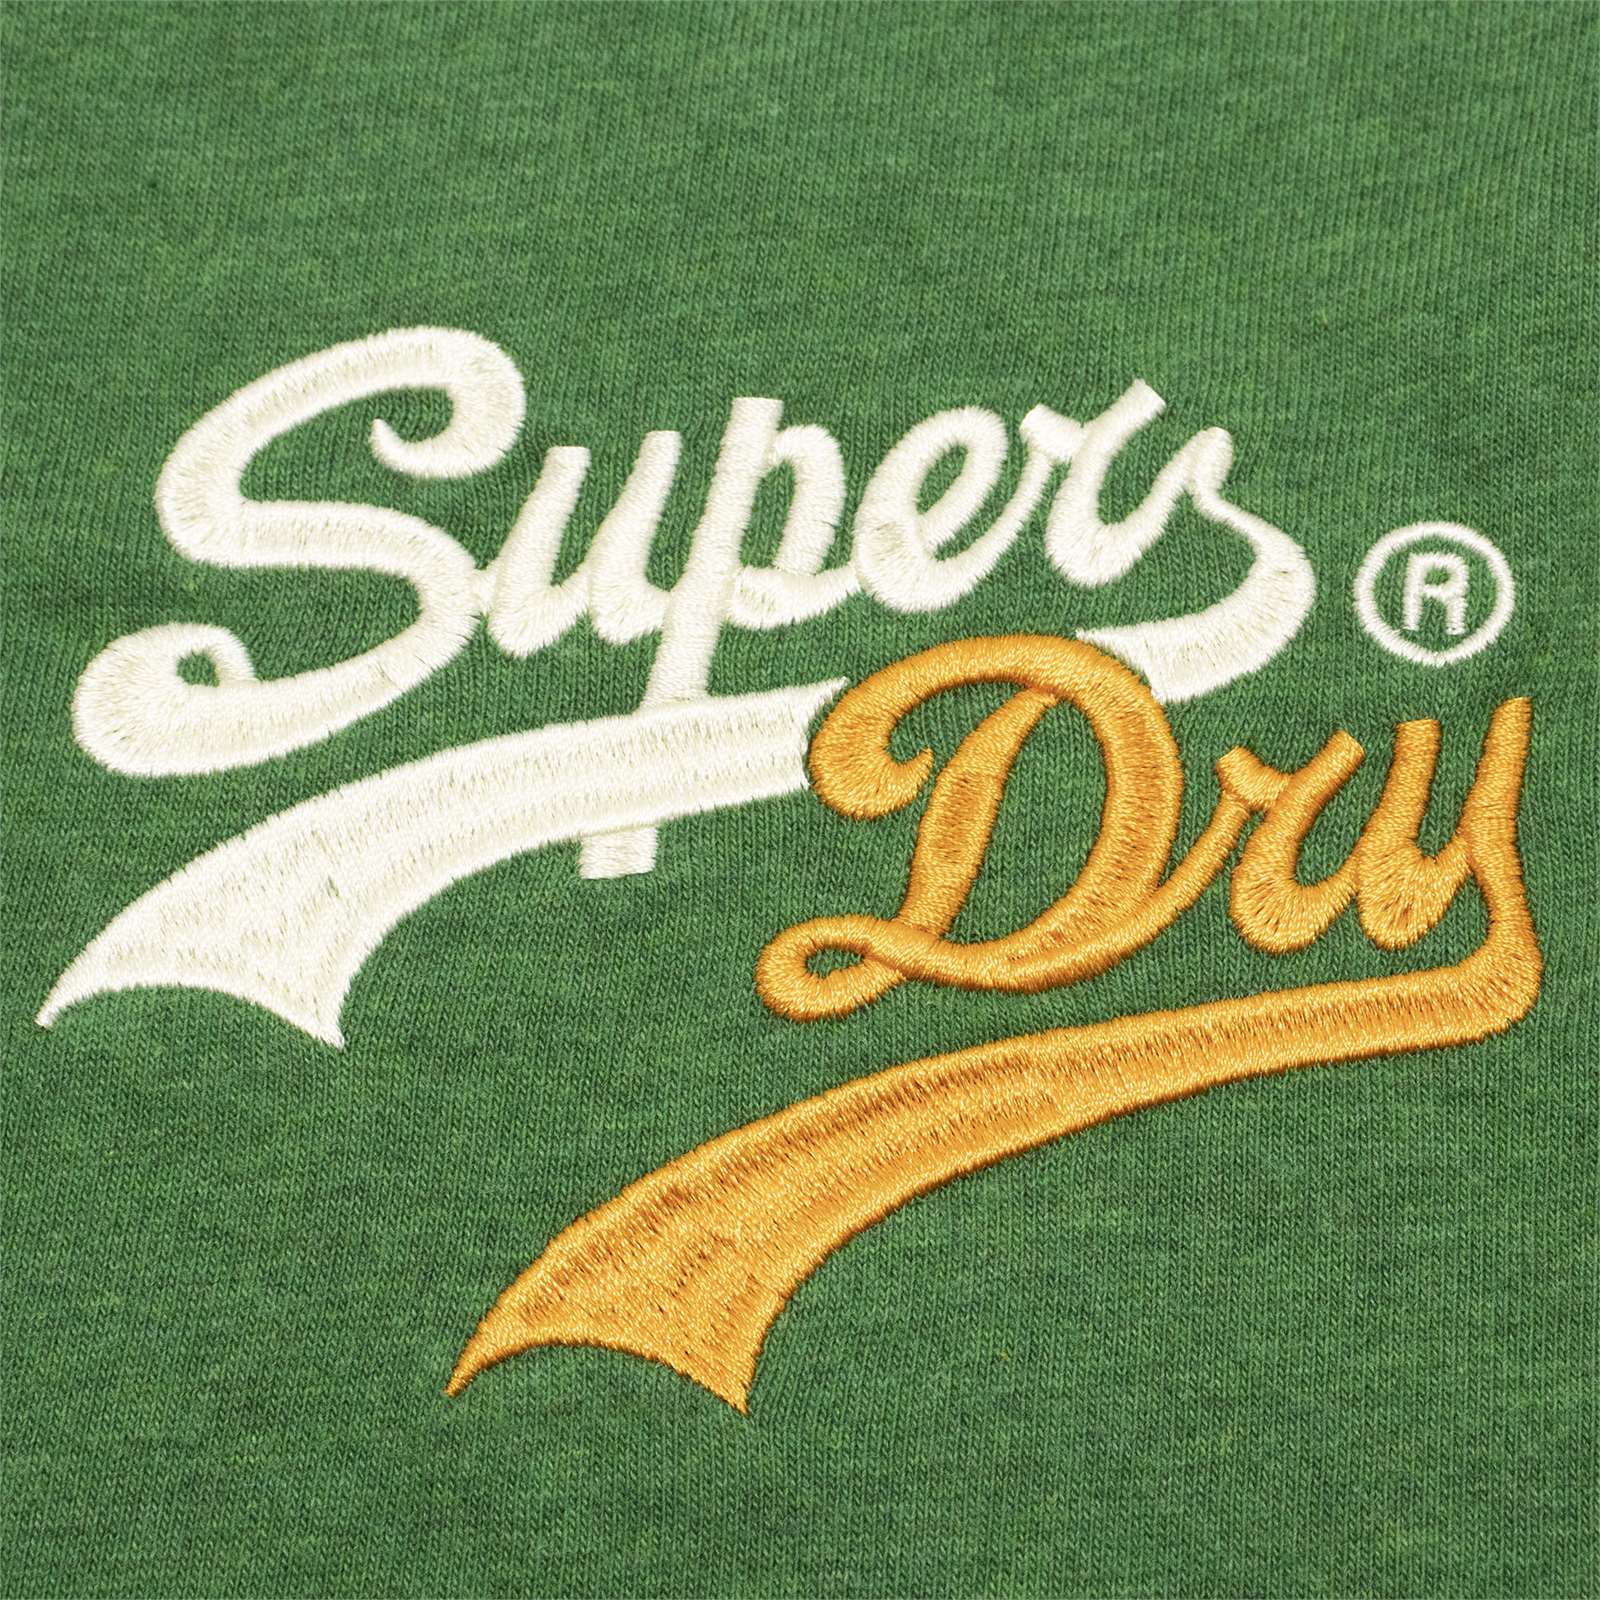 Super Dry Men Vintage Logo Interest Short Sleeve T-Shirt